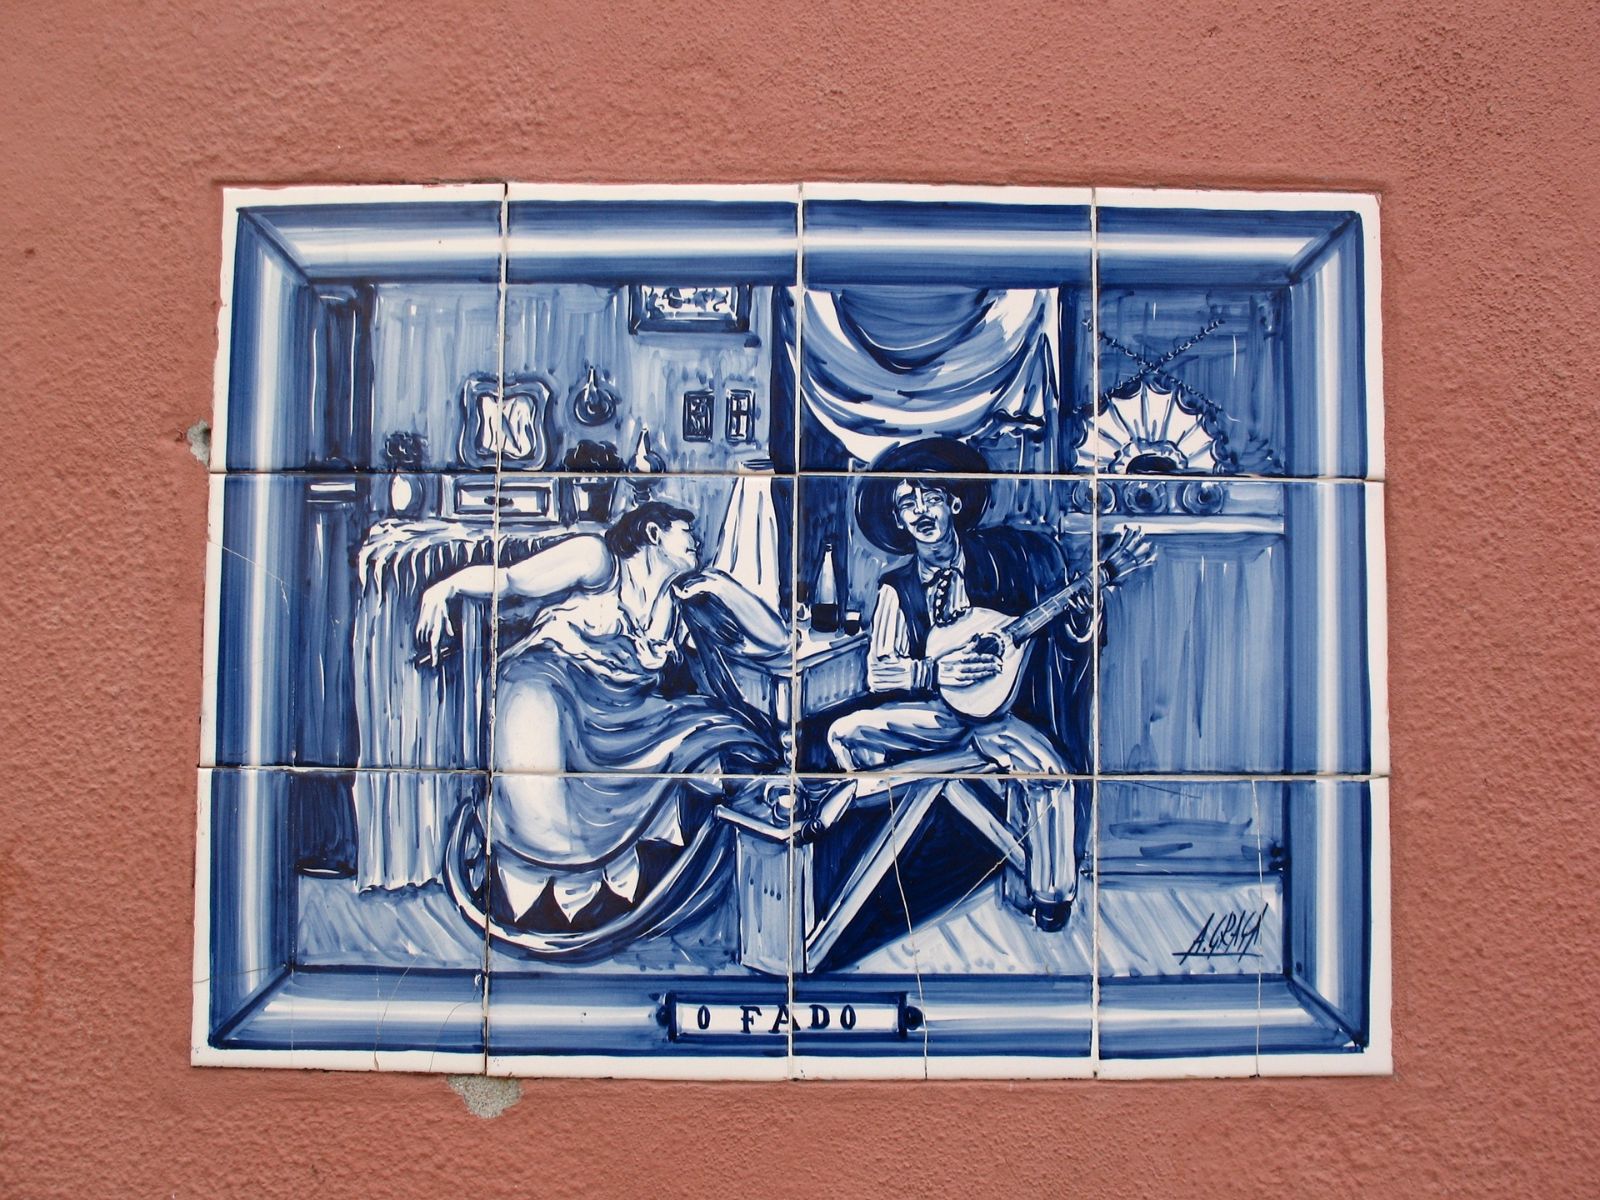 A ceramic mural of a Portuguese fado show